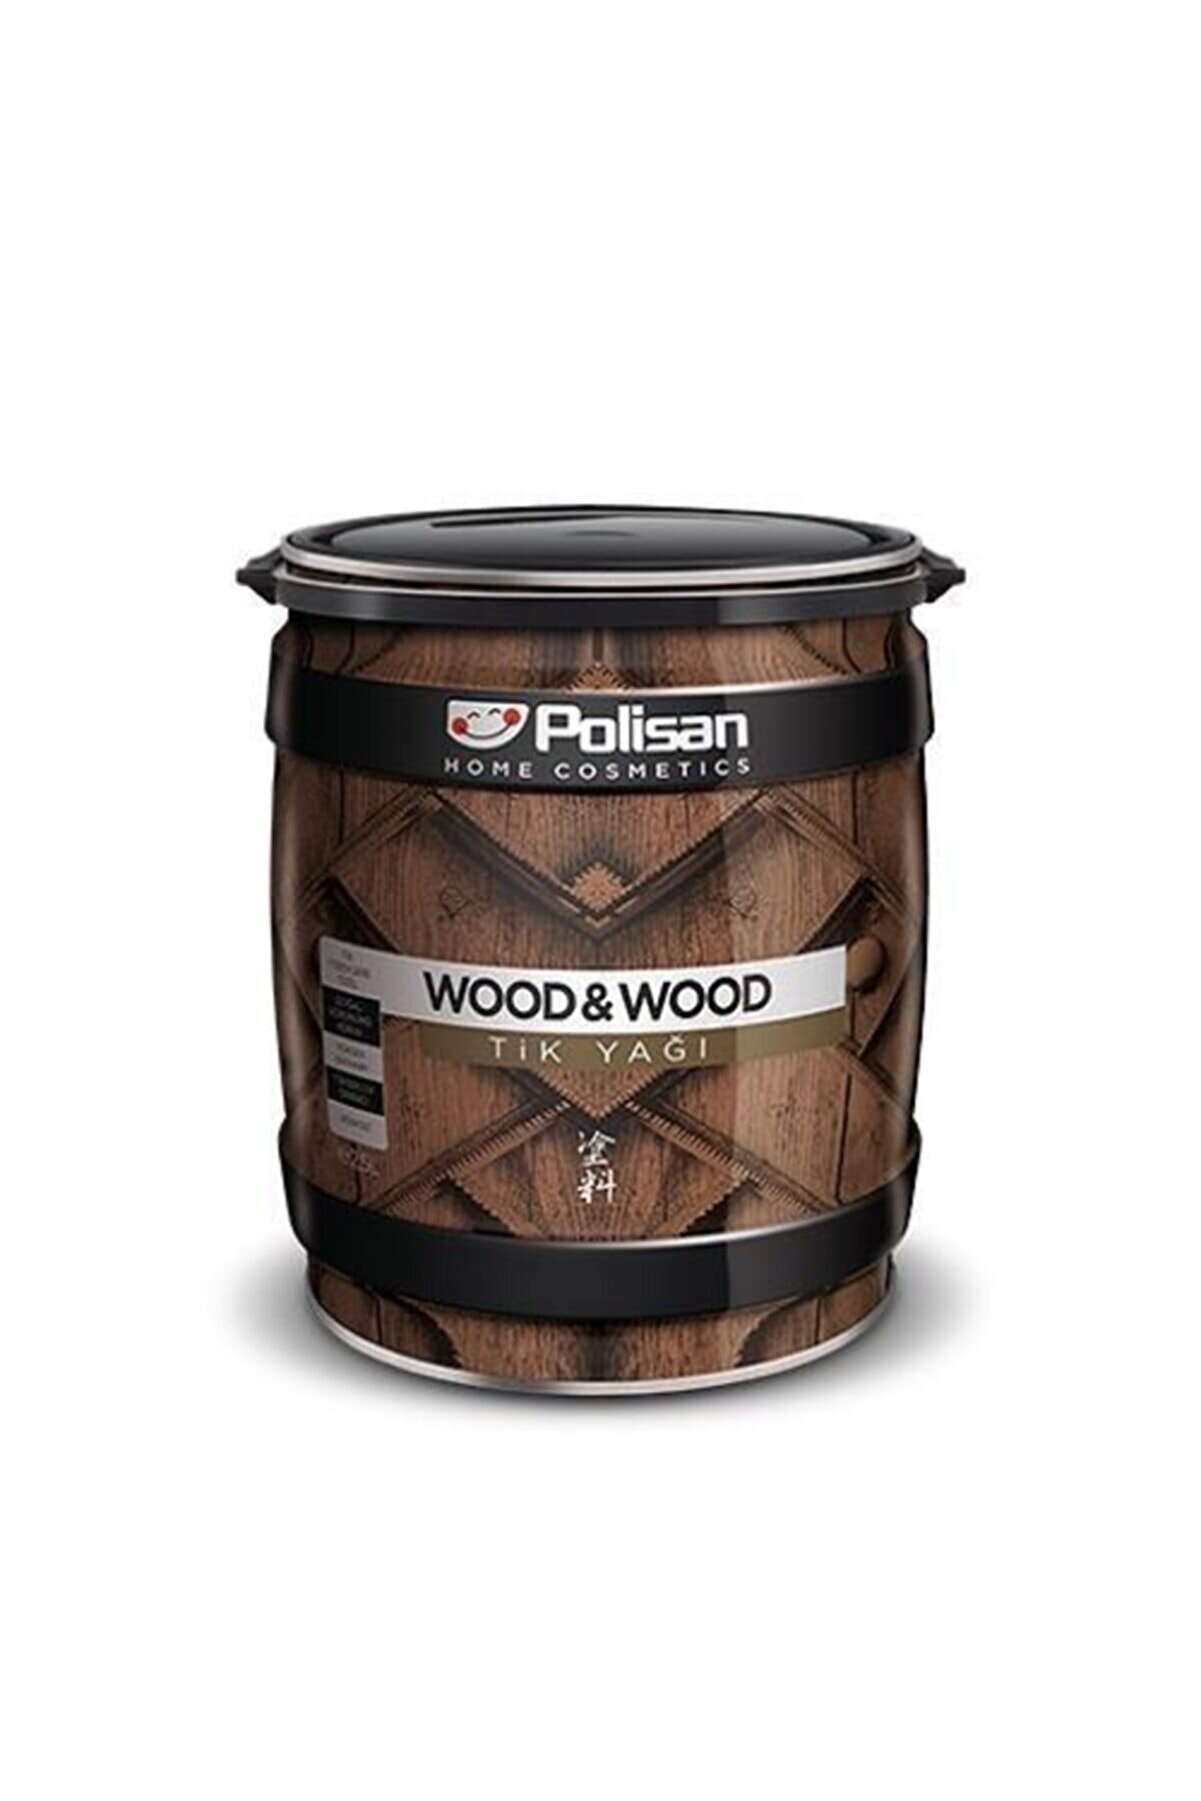 Polisan Tik Yaği Wood Wood Anti Aging 2.5 Lt